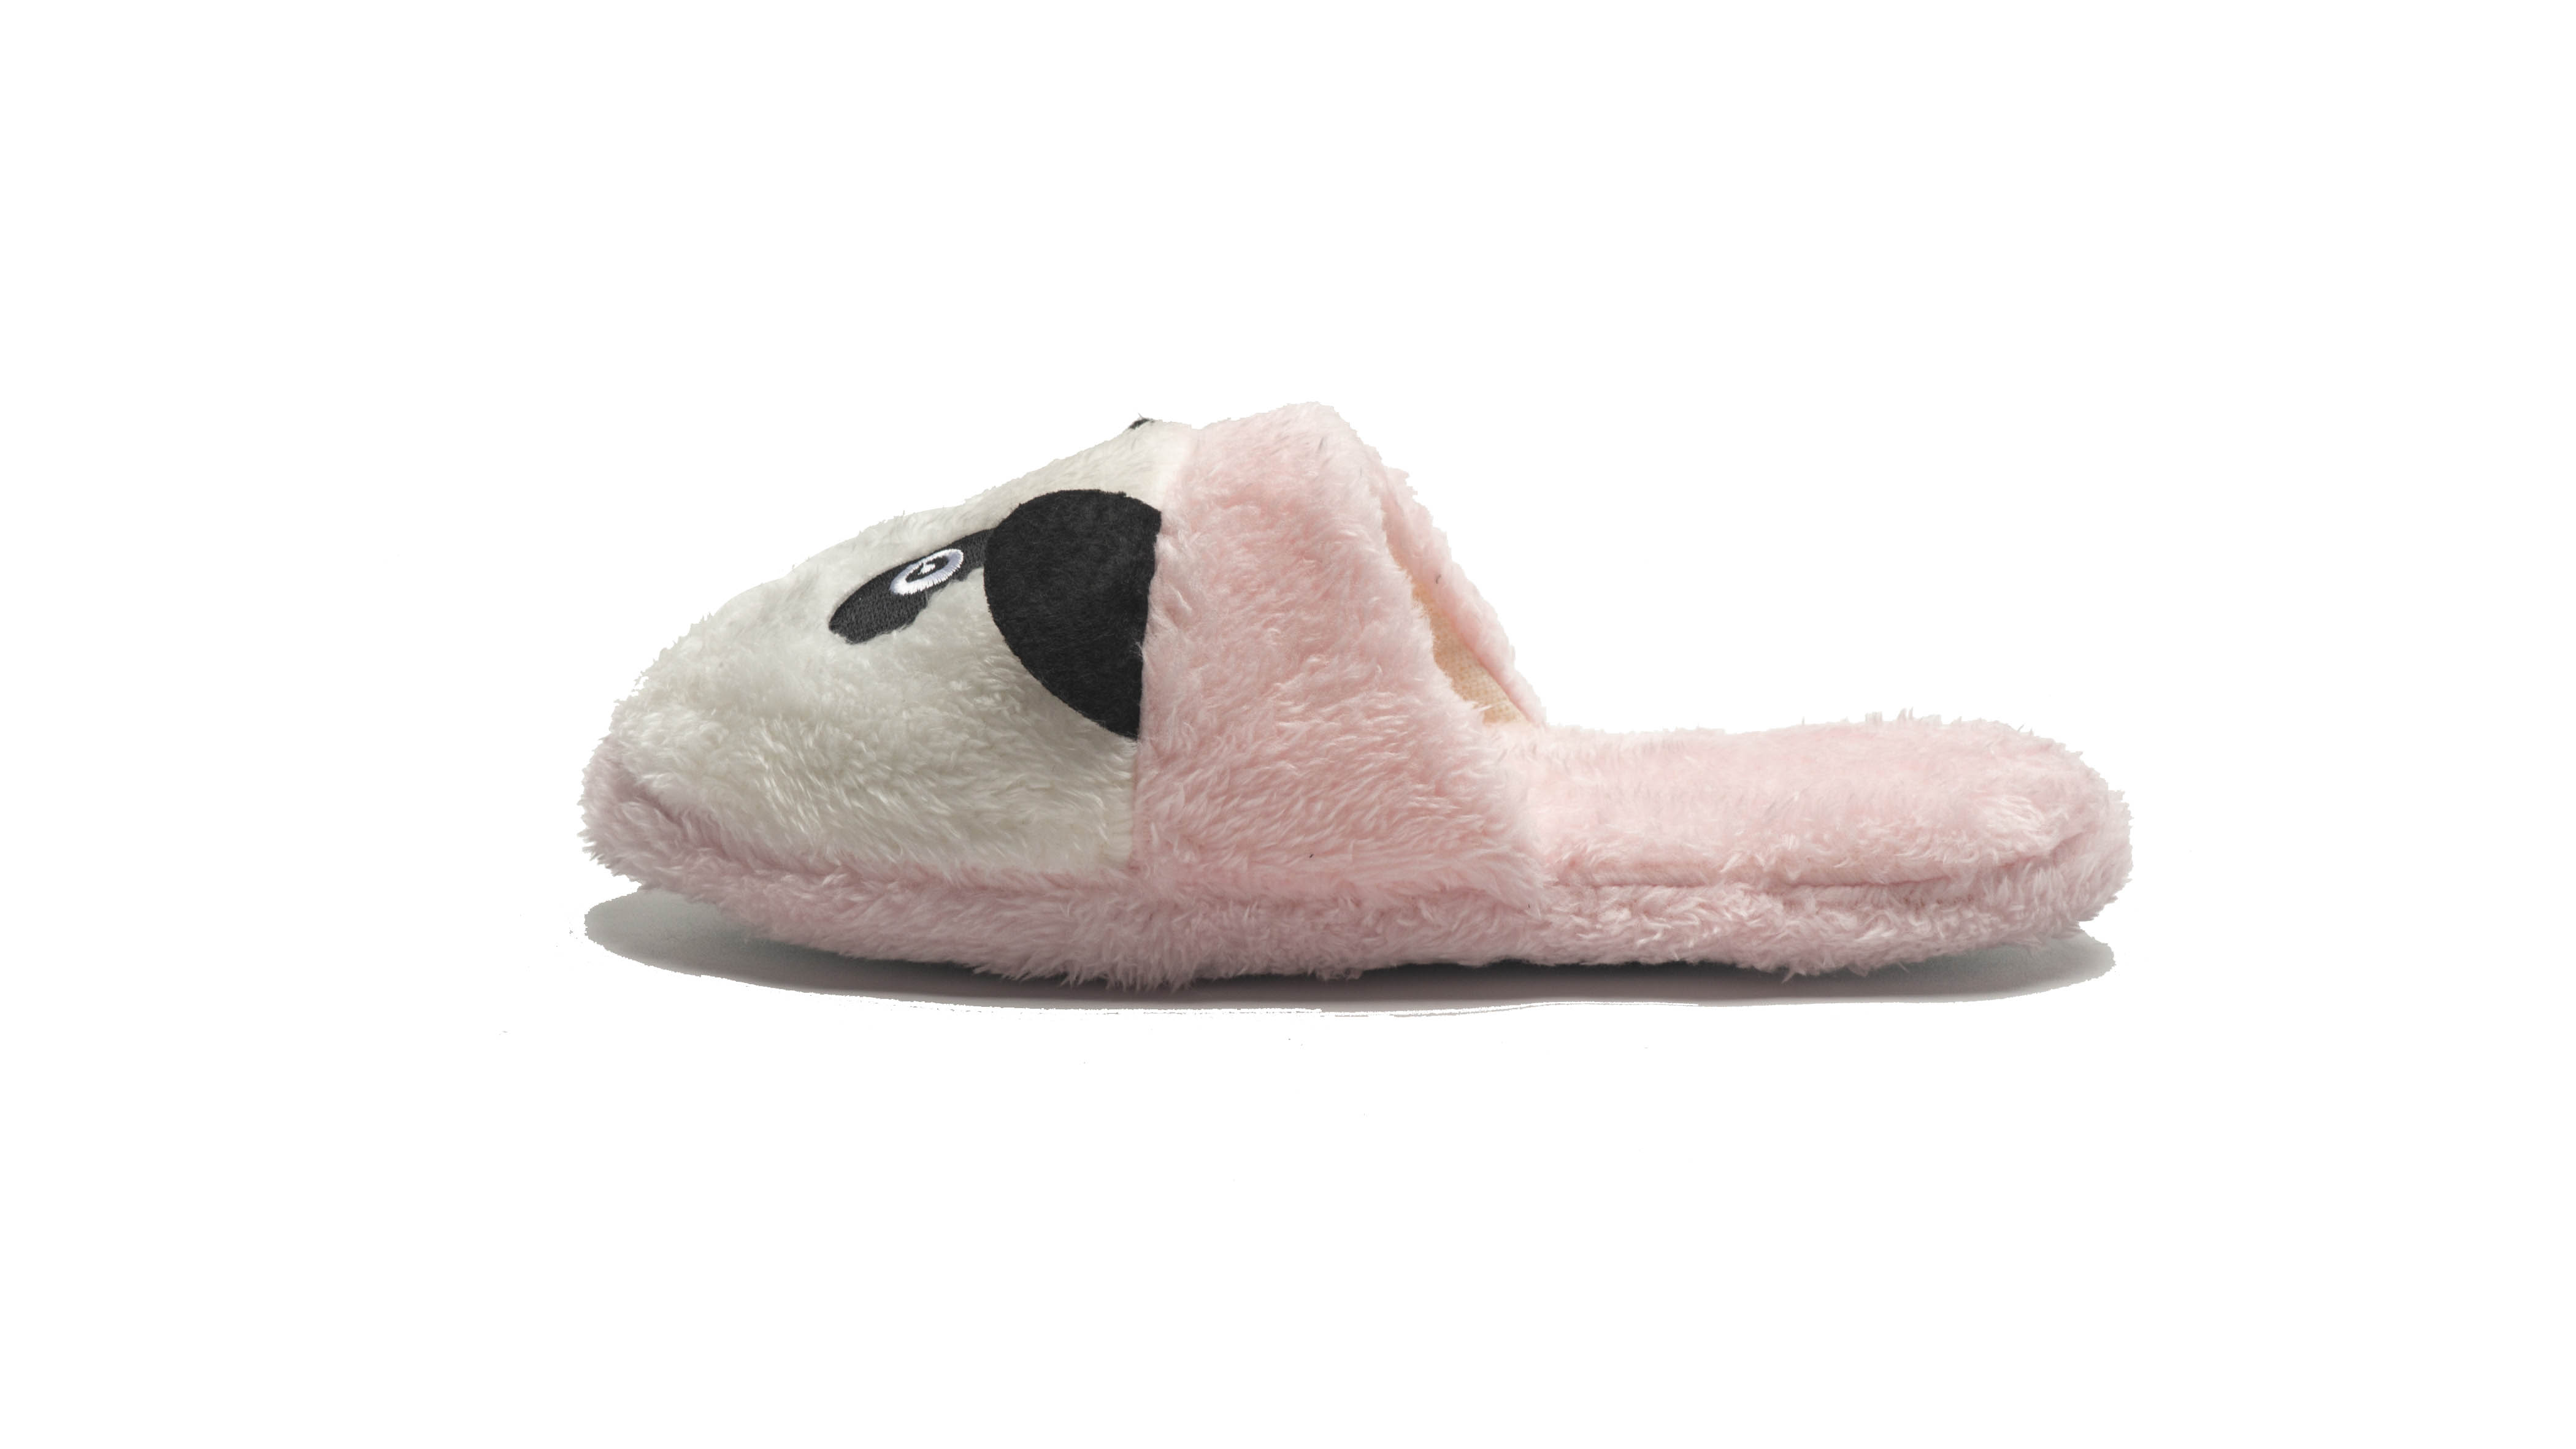 Winter Cotton slippers home fashion rabbit fur women indoor slipper cotton soft support OEM ODM